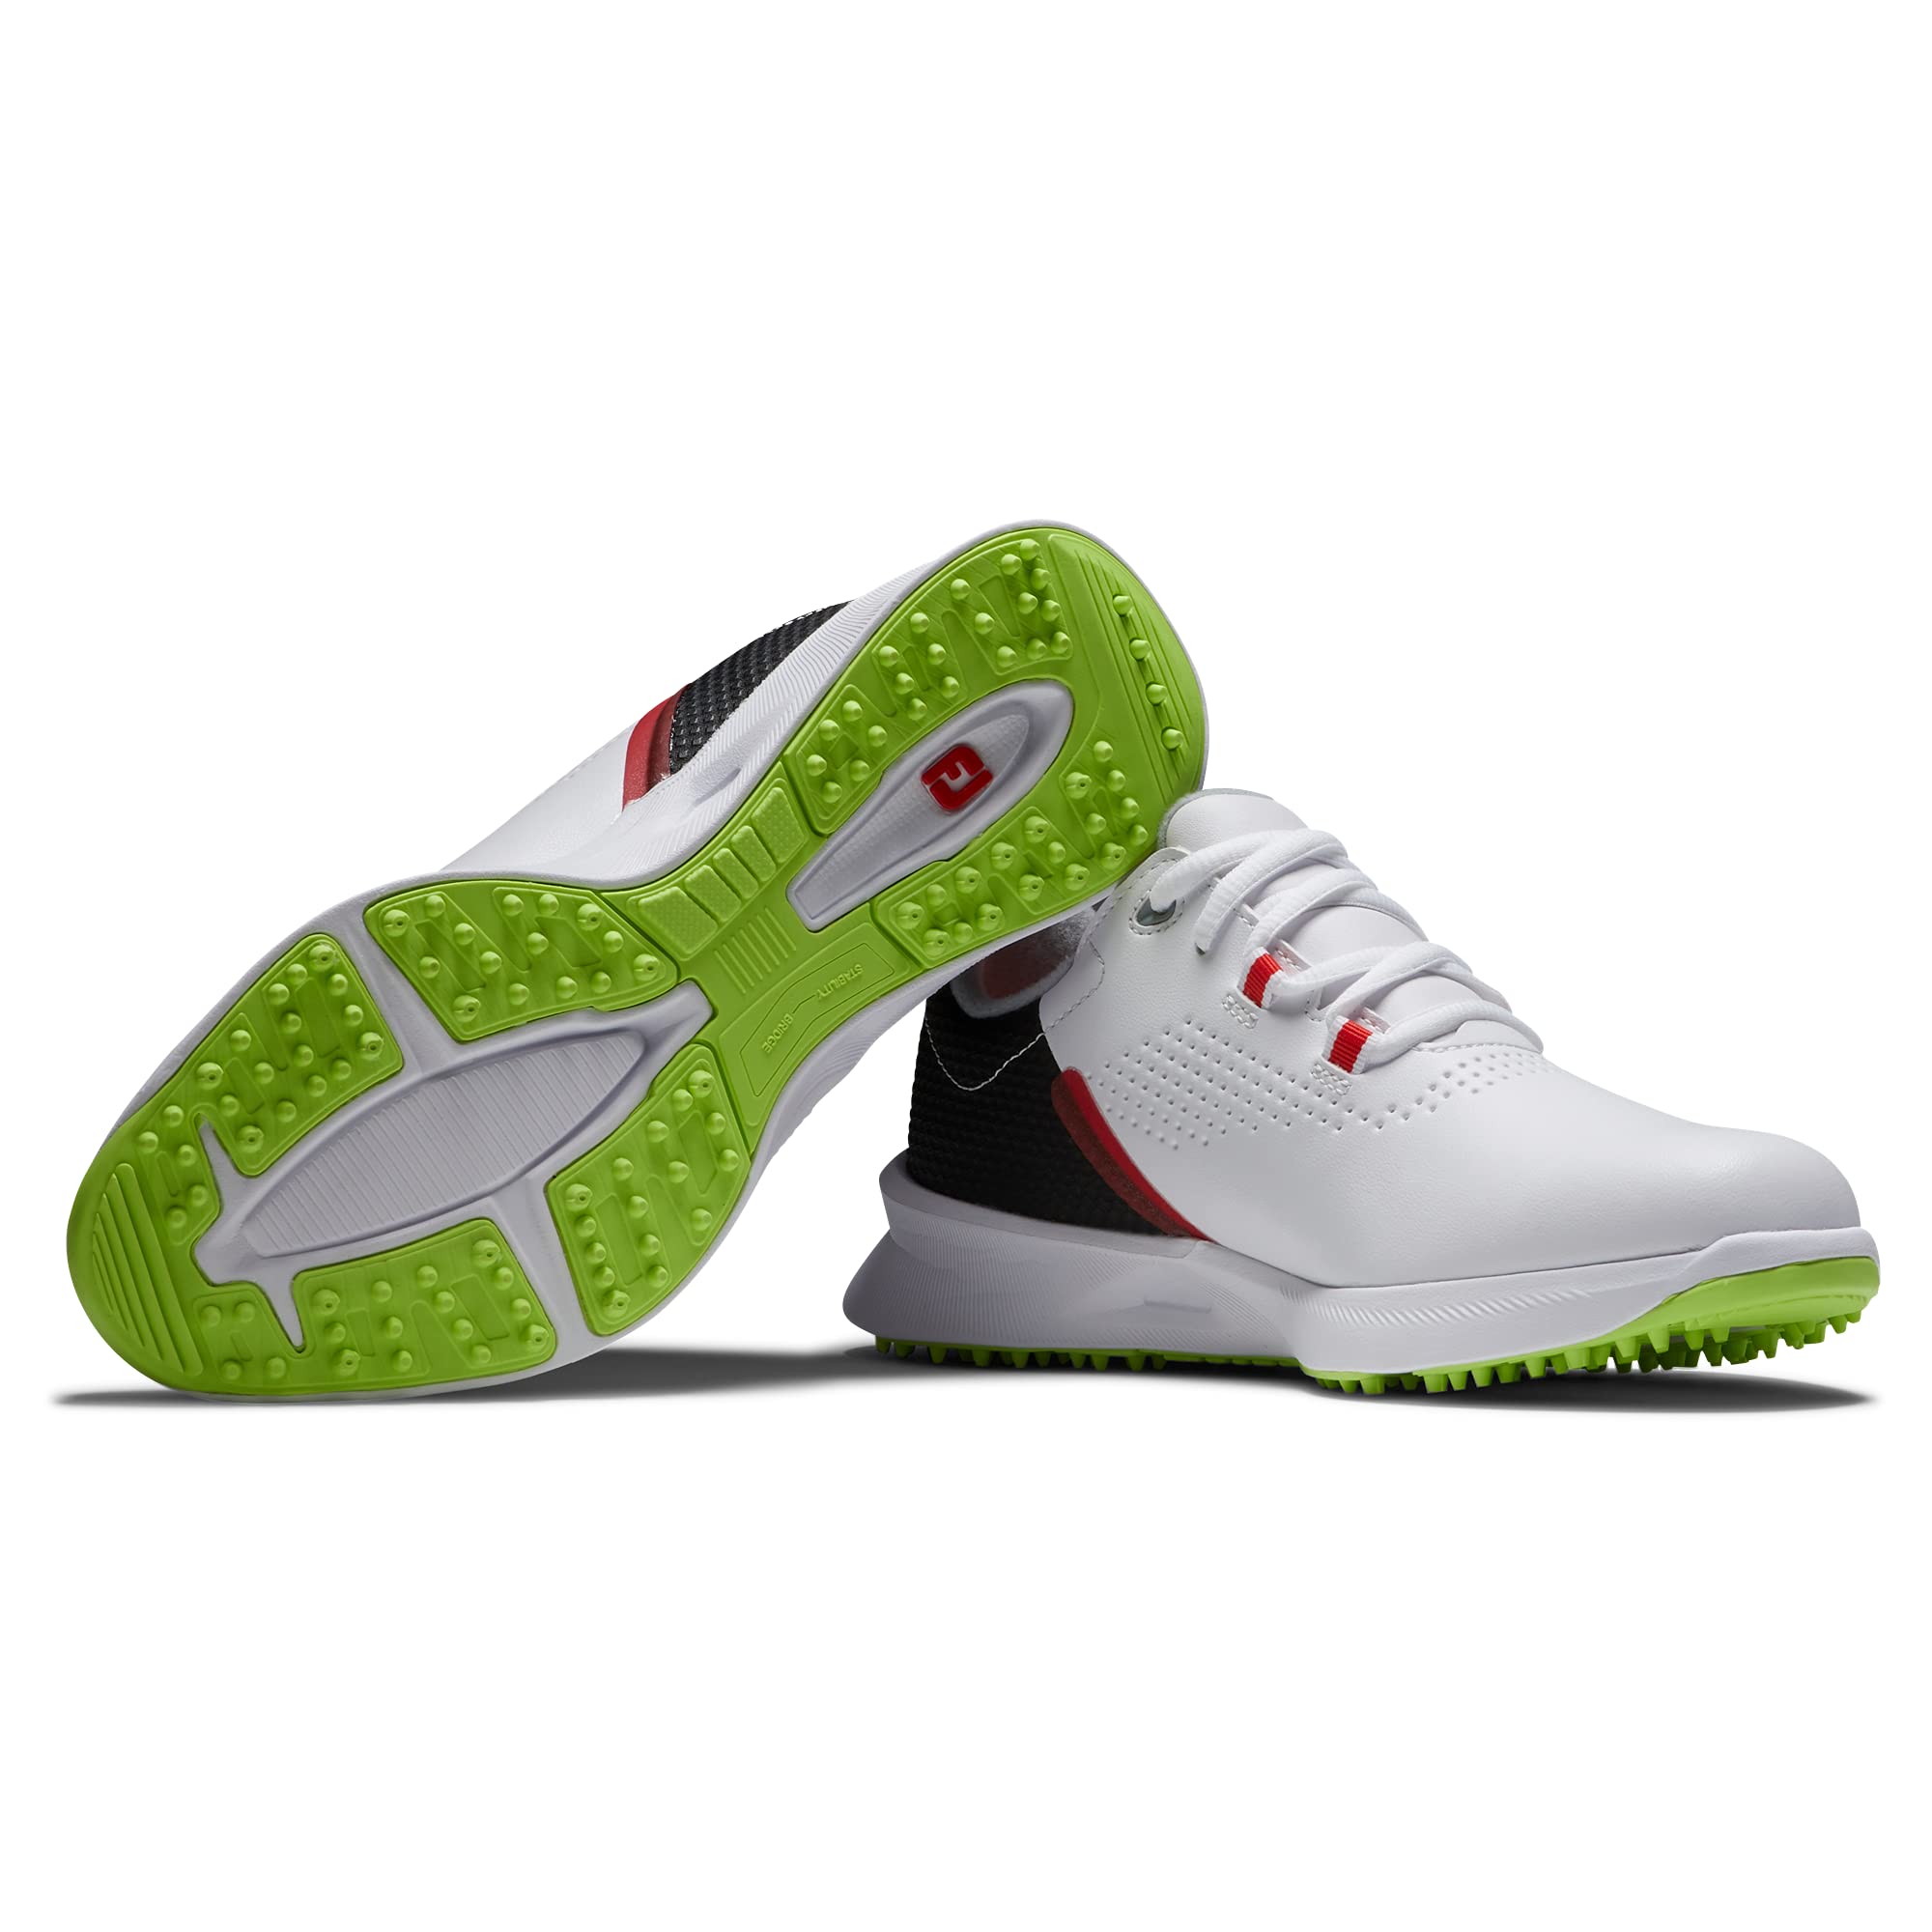 FootJoy Unisex-Child Fj Fuel Junior Golf Shoe